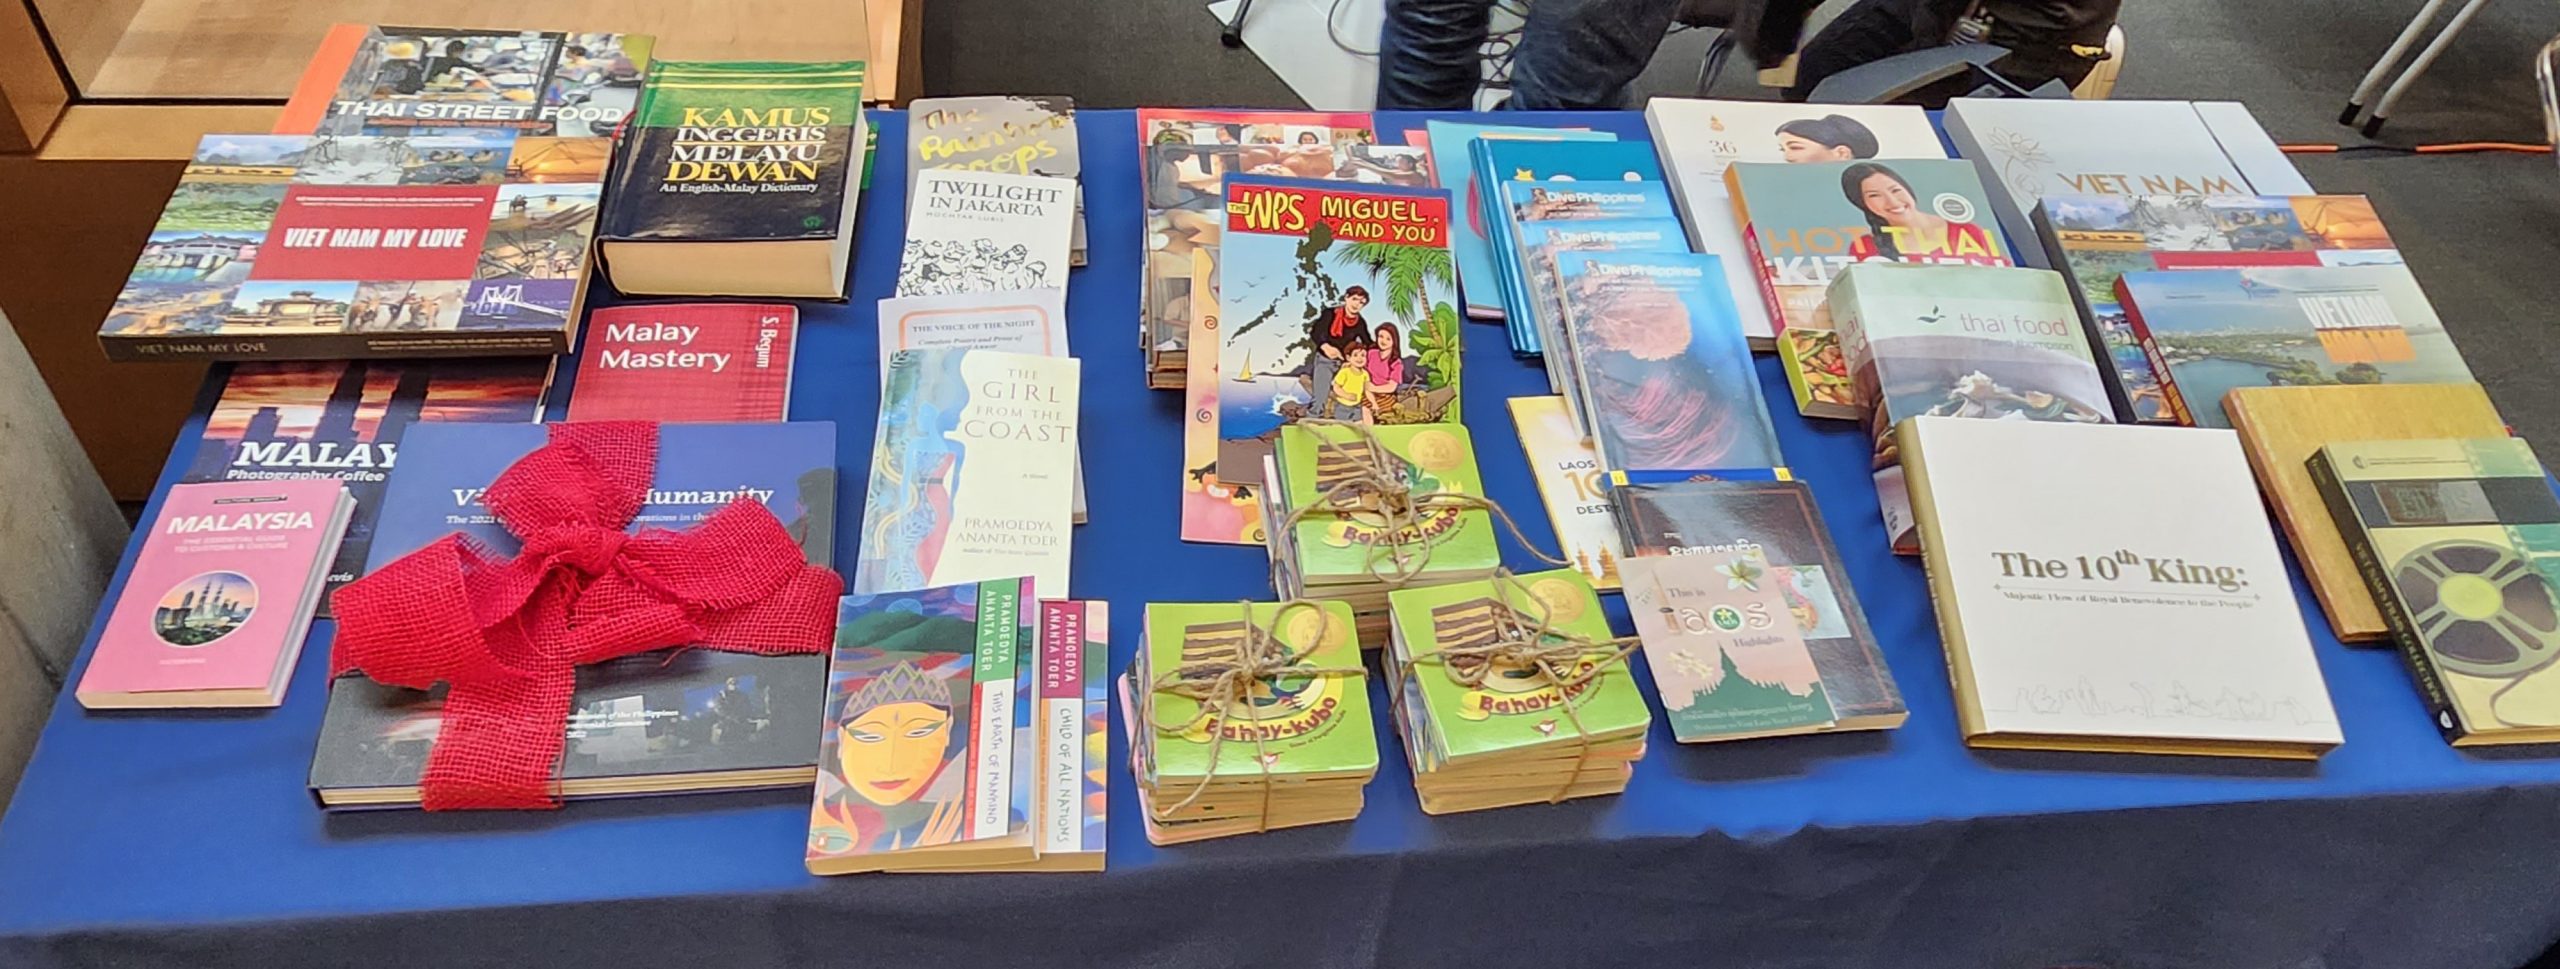 ASEAN Consuls General in Vancouver Donate Books to the  Vancouver Public Library (VPL)